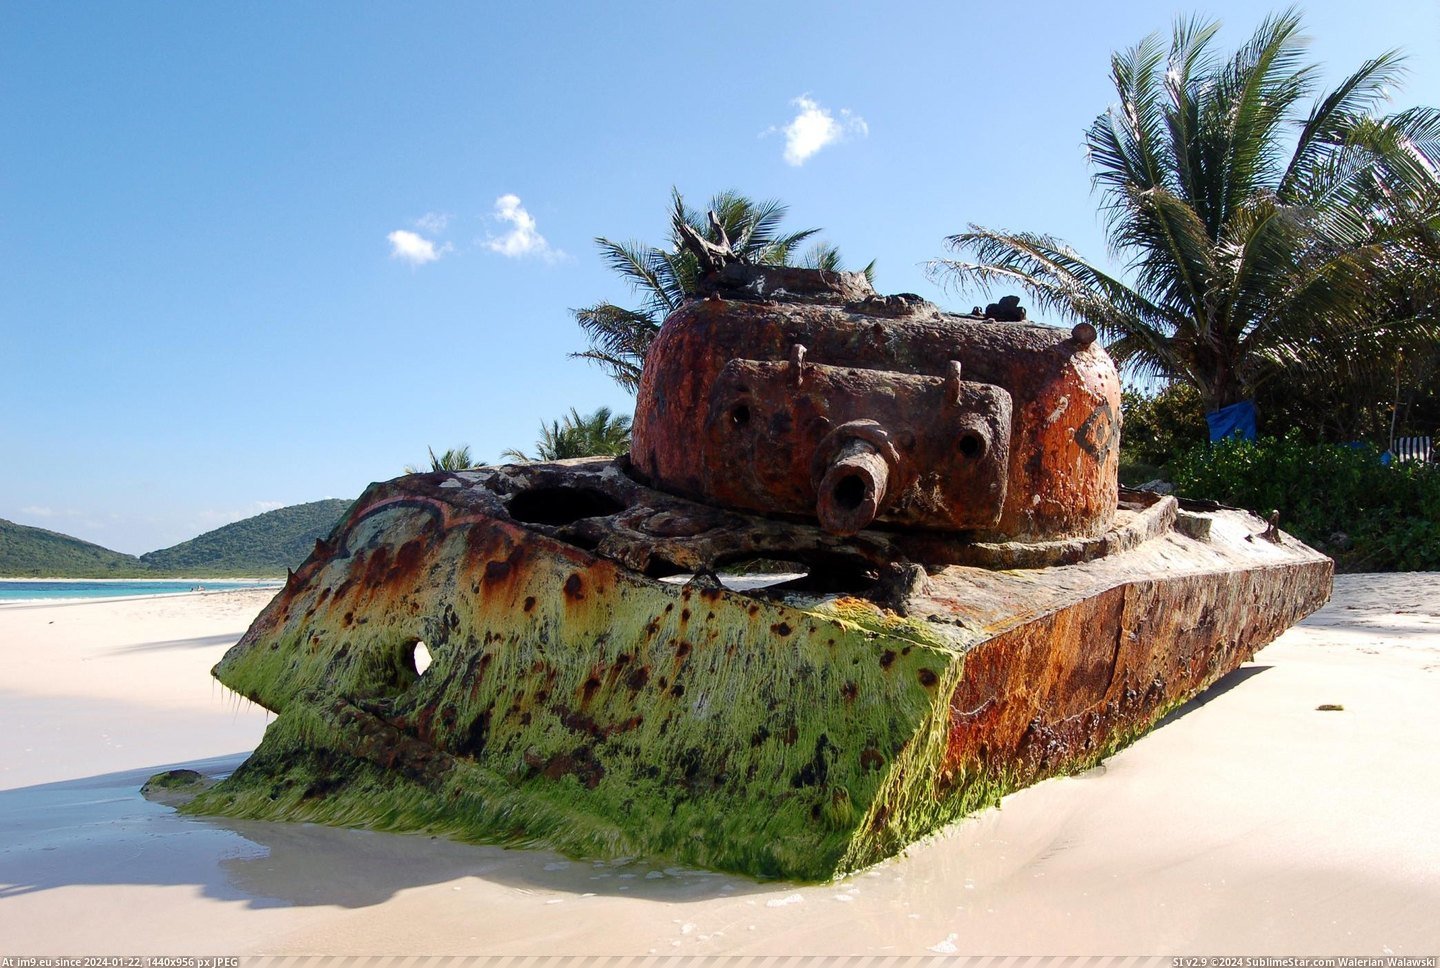 #Beach #Abandoned #Rico #Tank #Puerto [Pics] This abandoned tank on a beach in Puerto Rico Pic. (Bild von album My r/PICS favs))